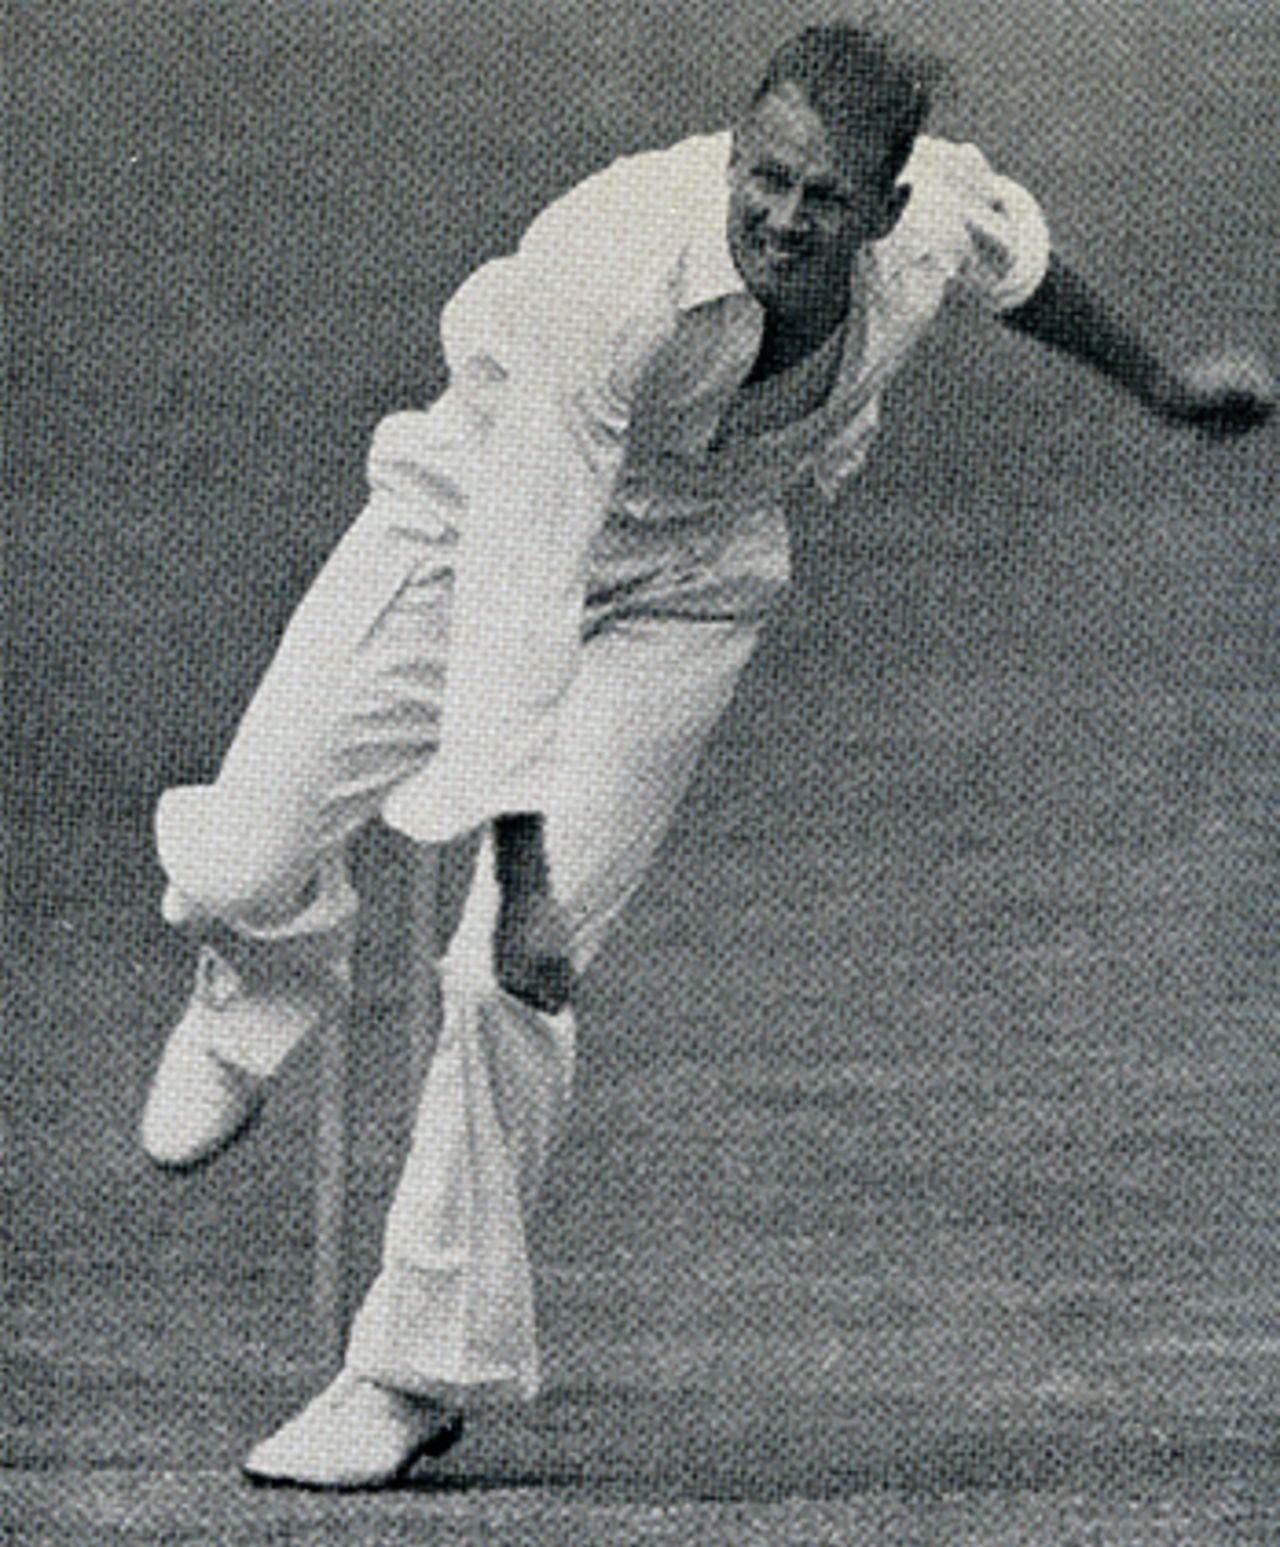 Lindsay Tuckett bowling against England at Trent Bridge, England v South Africa, Trent Bridge, June 10, 1947